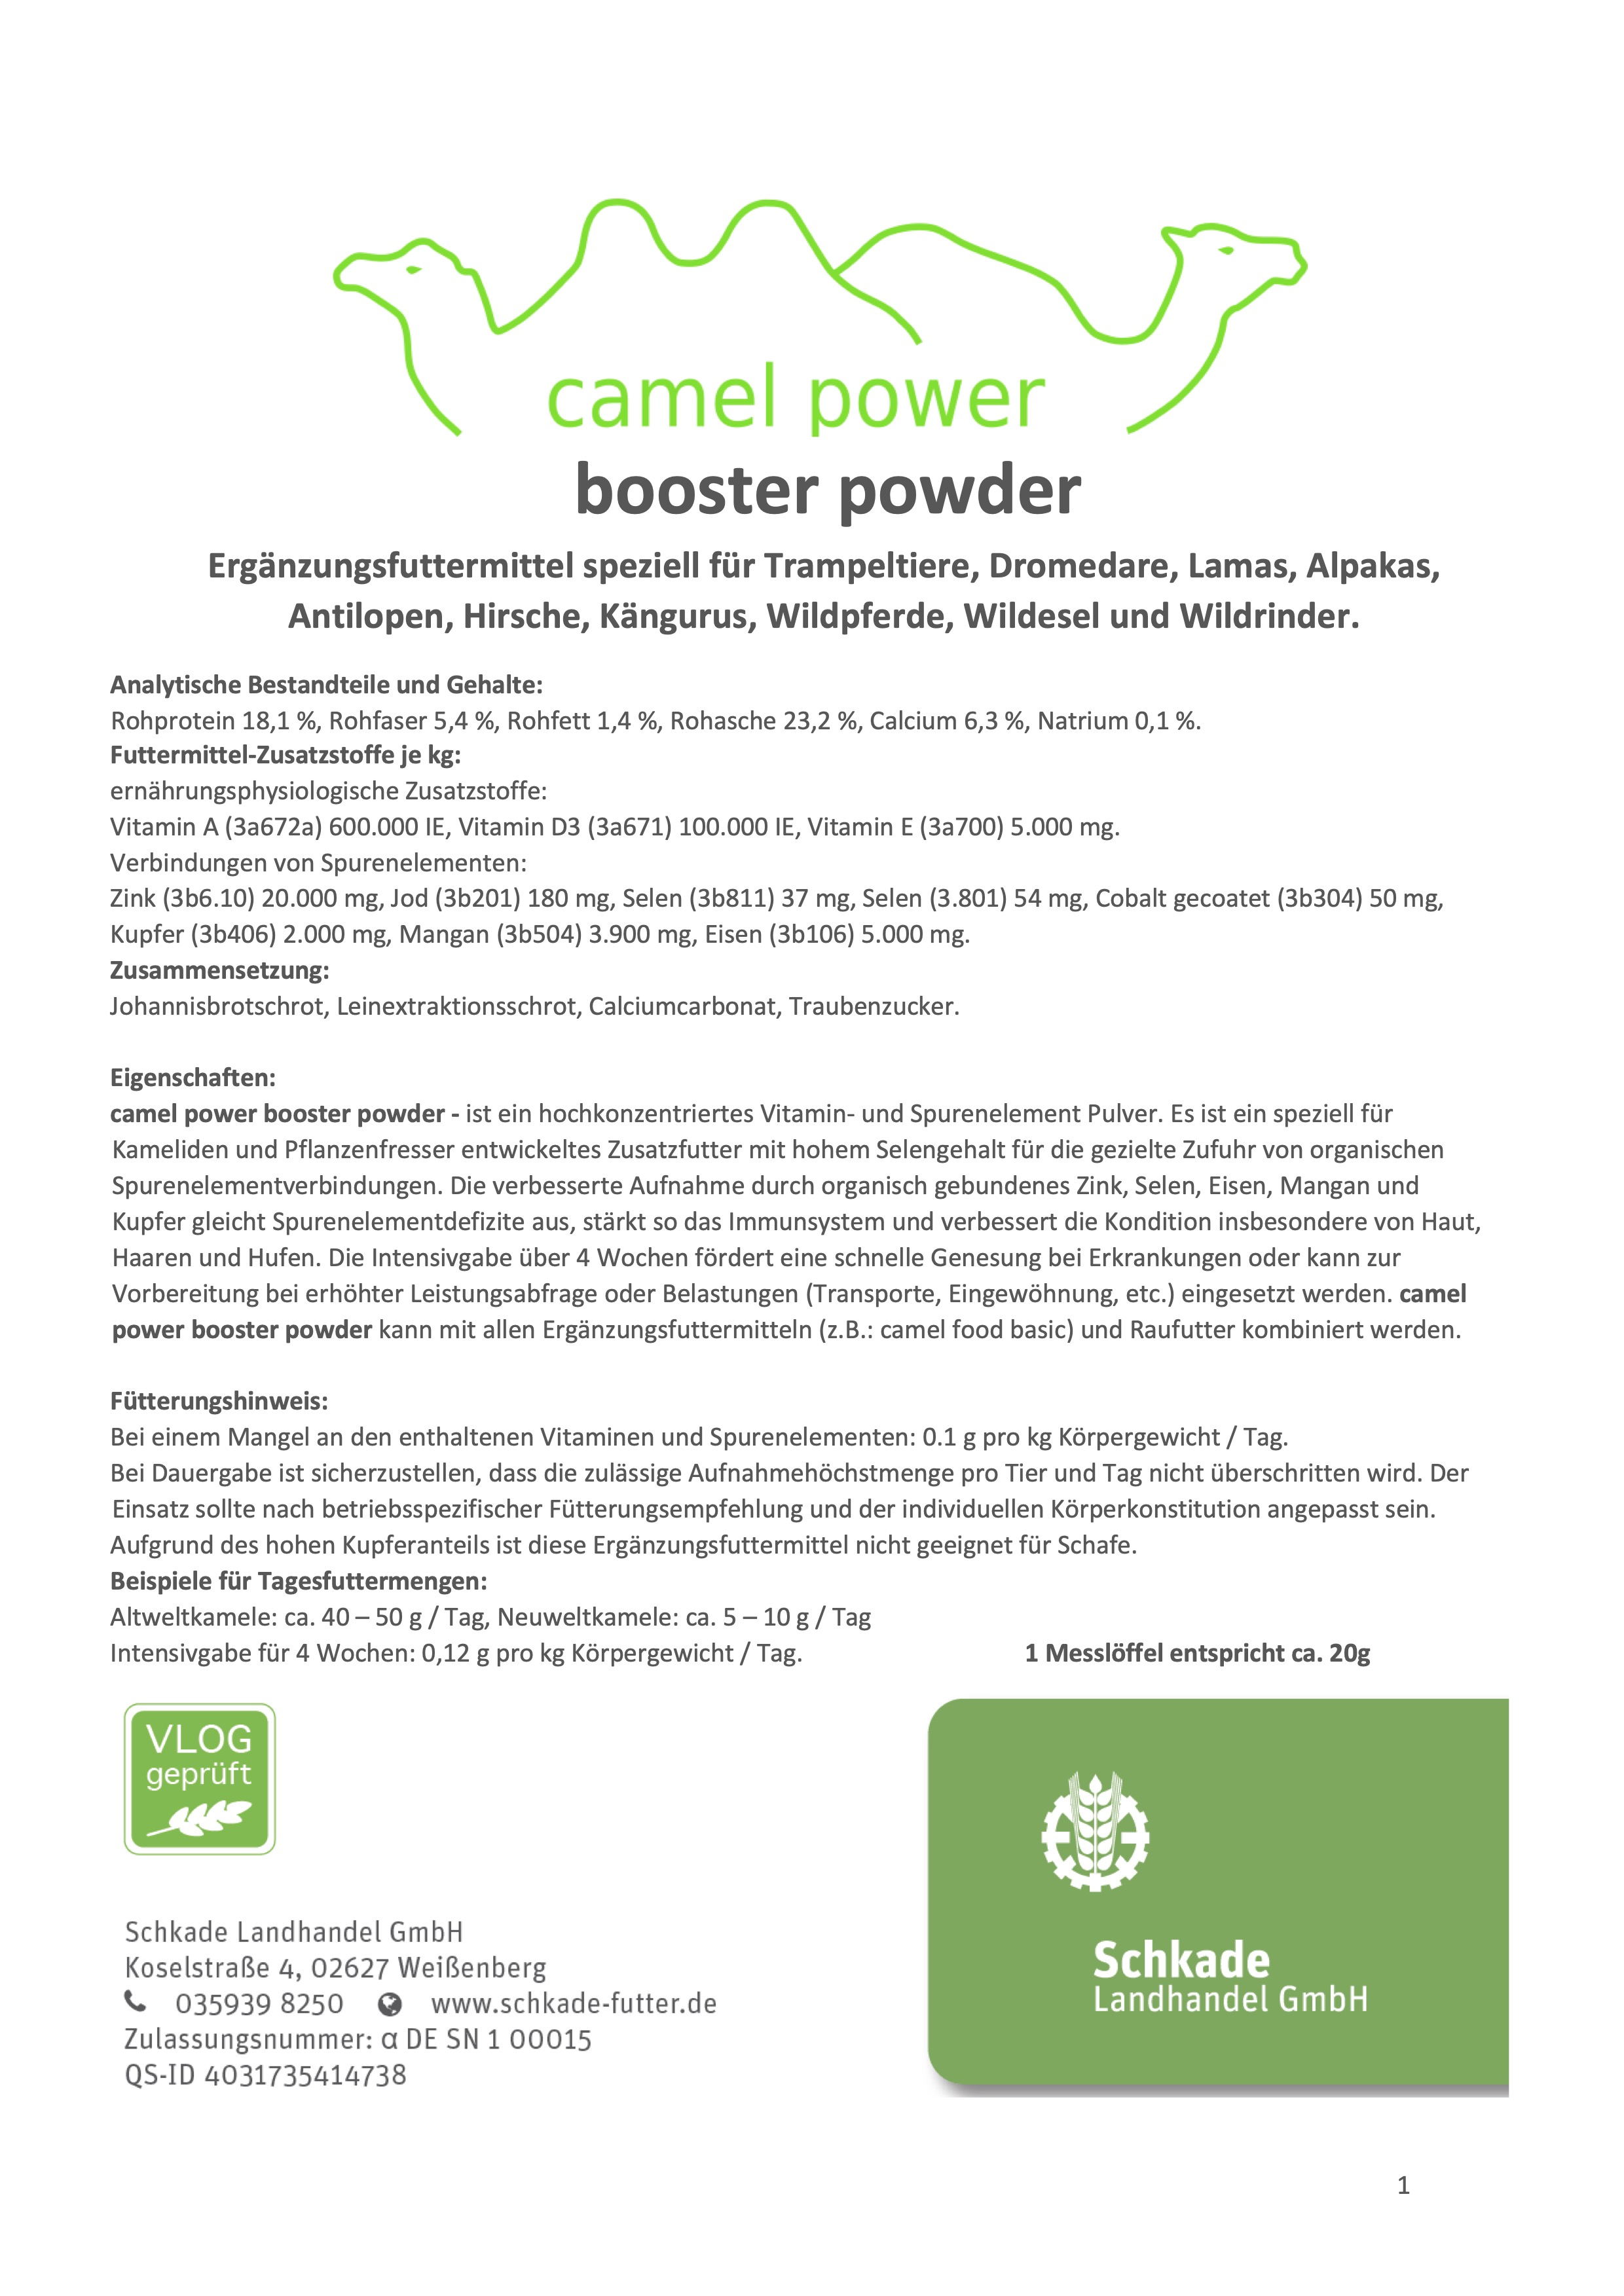 camel power - booster powder